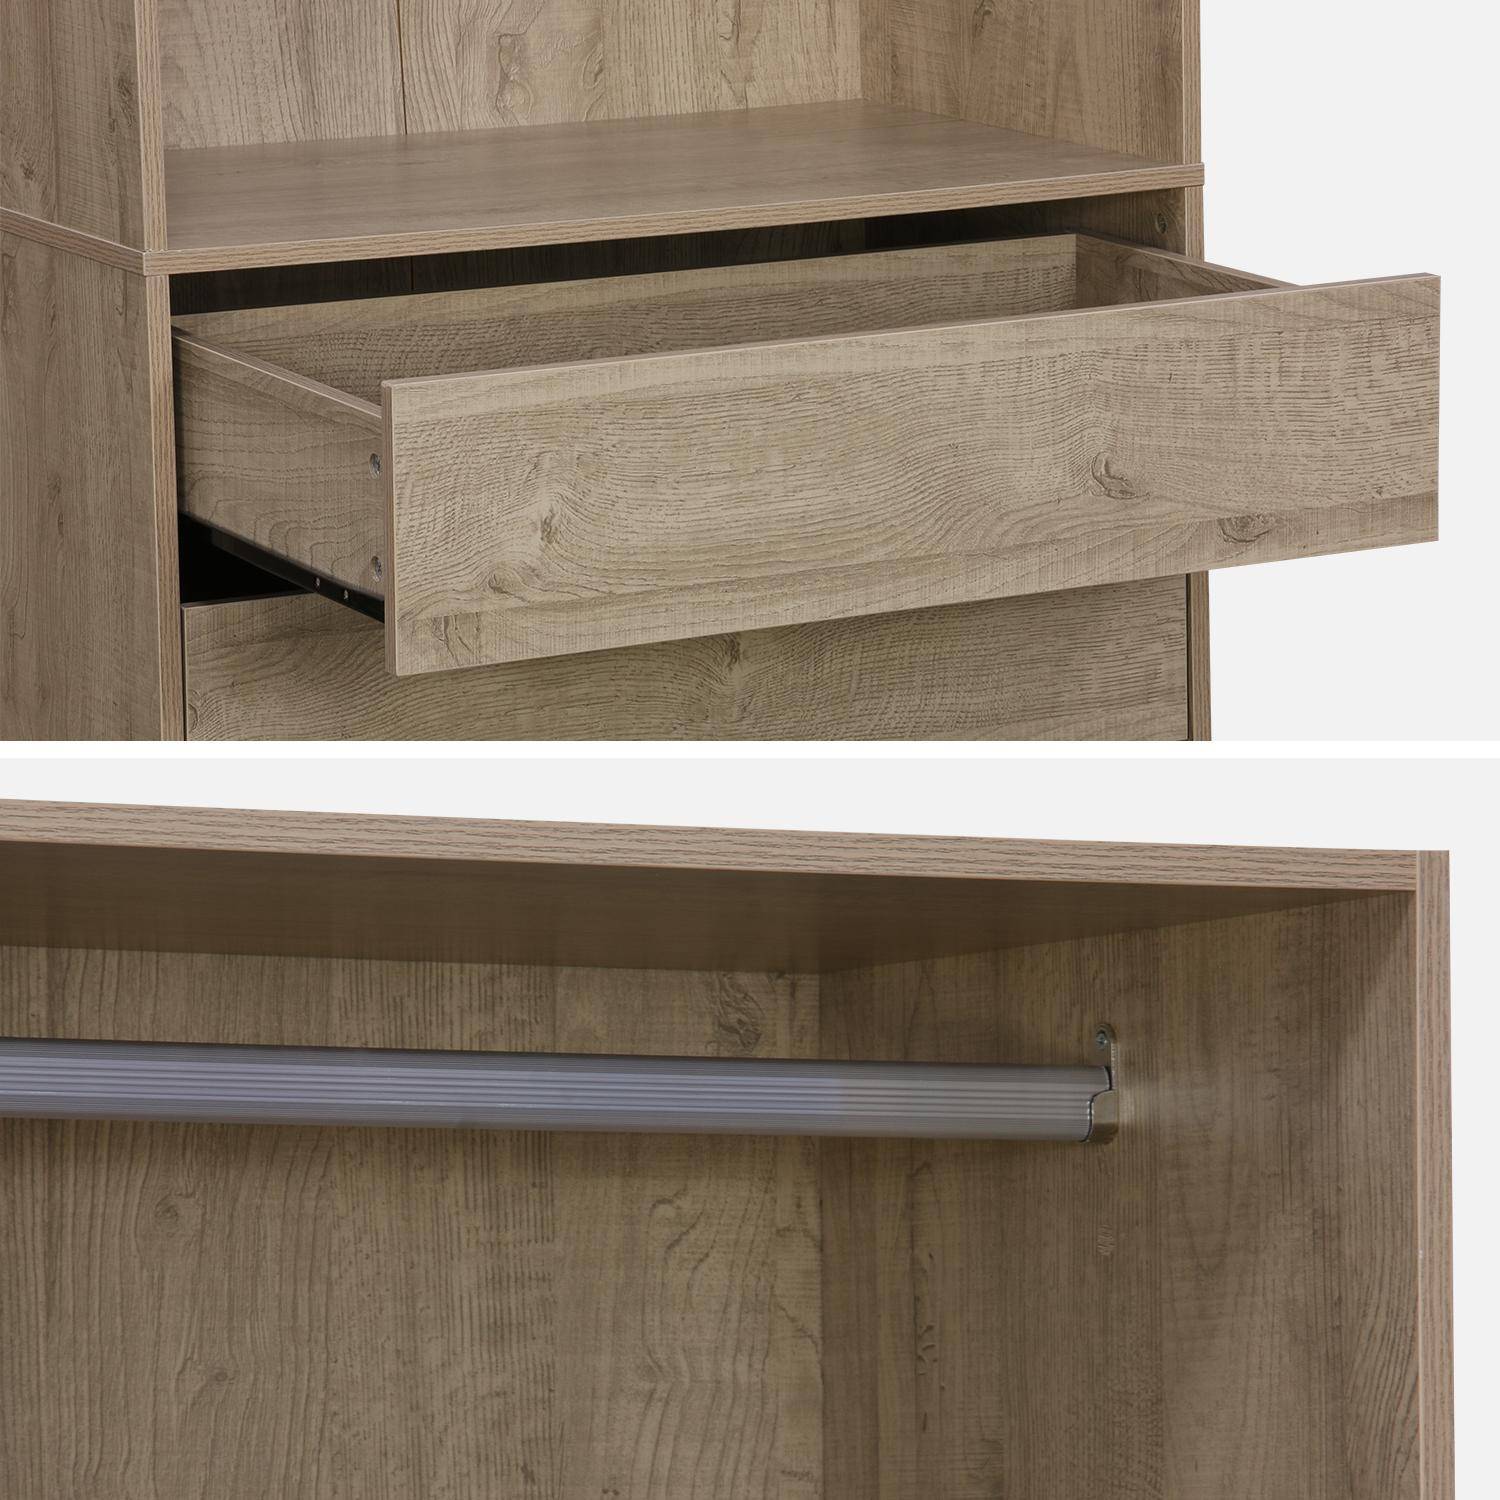 Modular open wardrobe drawer and rail unit, 60x45x180cm, Modulo, 4 drawers, 1 clothes rail, Natural,sweeek,Photo8